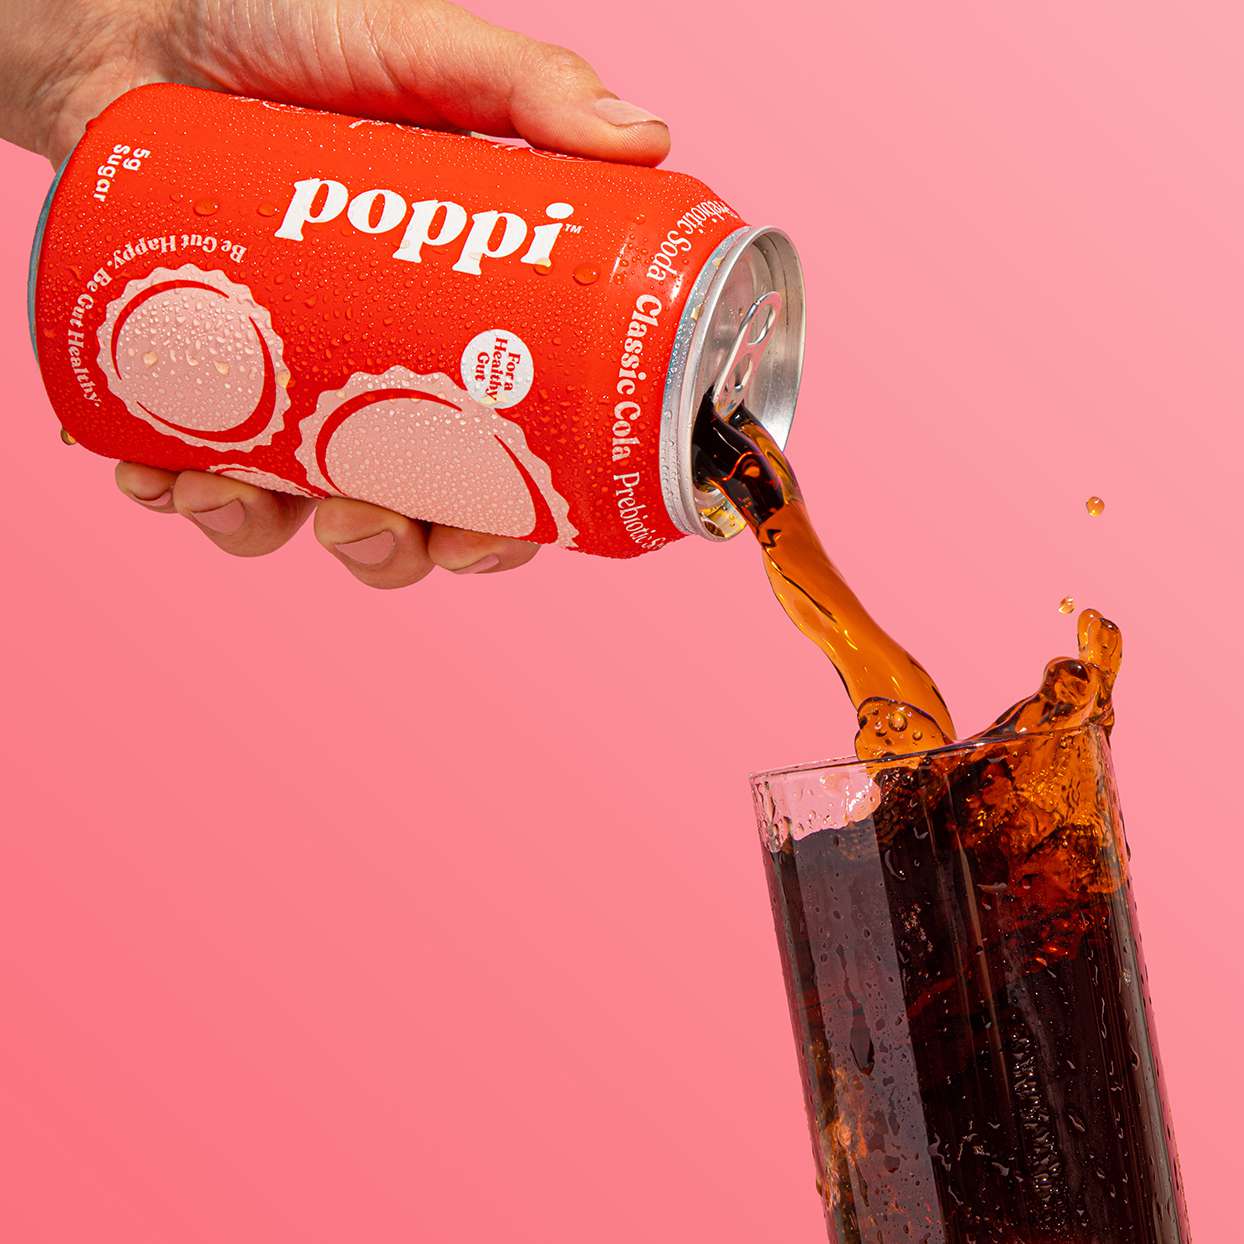 Poppi Classic Cola pouring into a glass